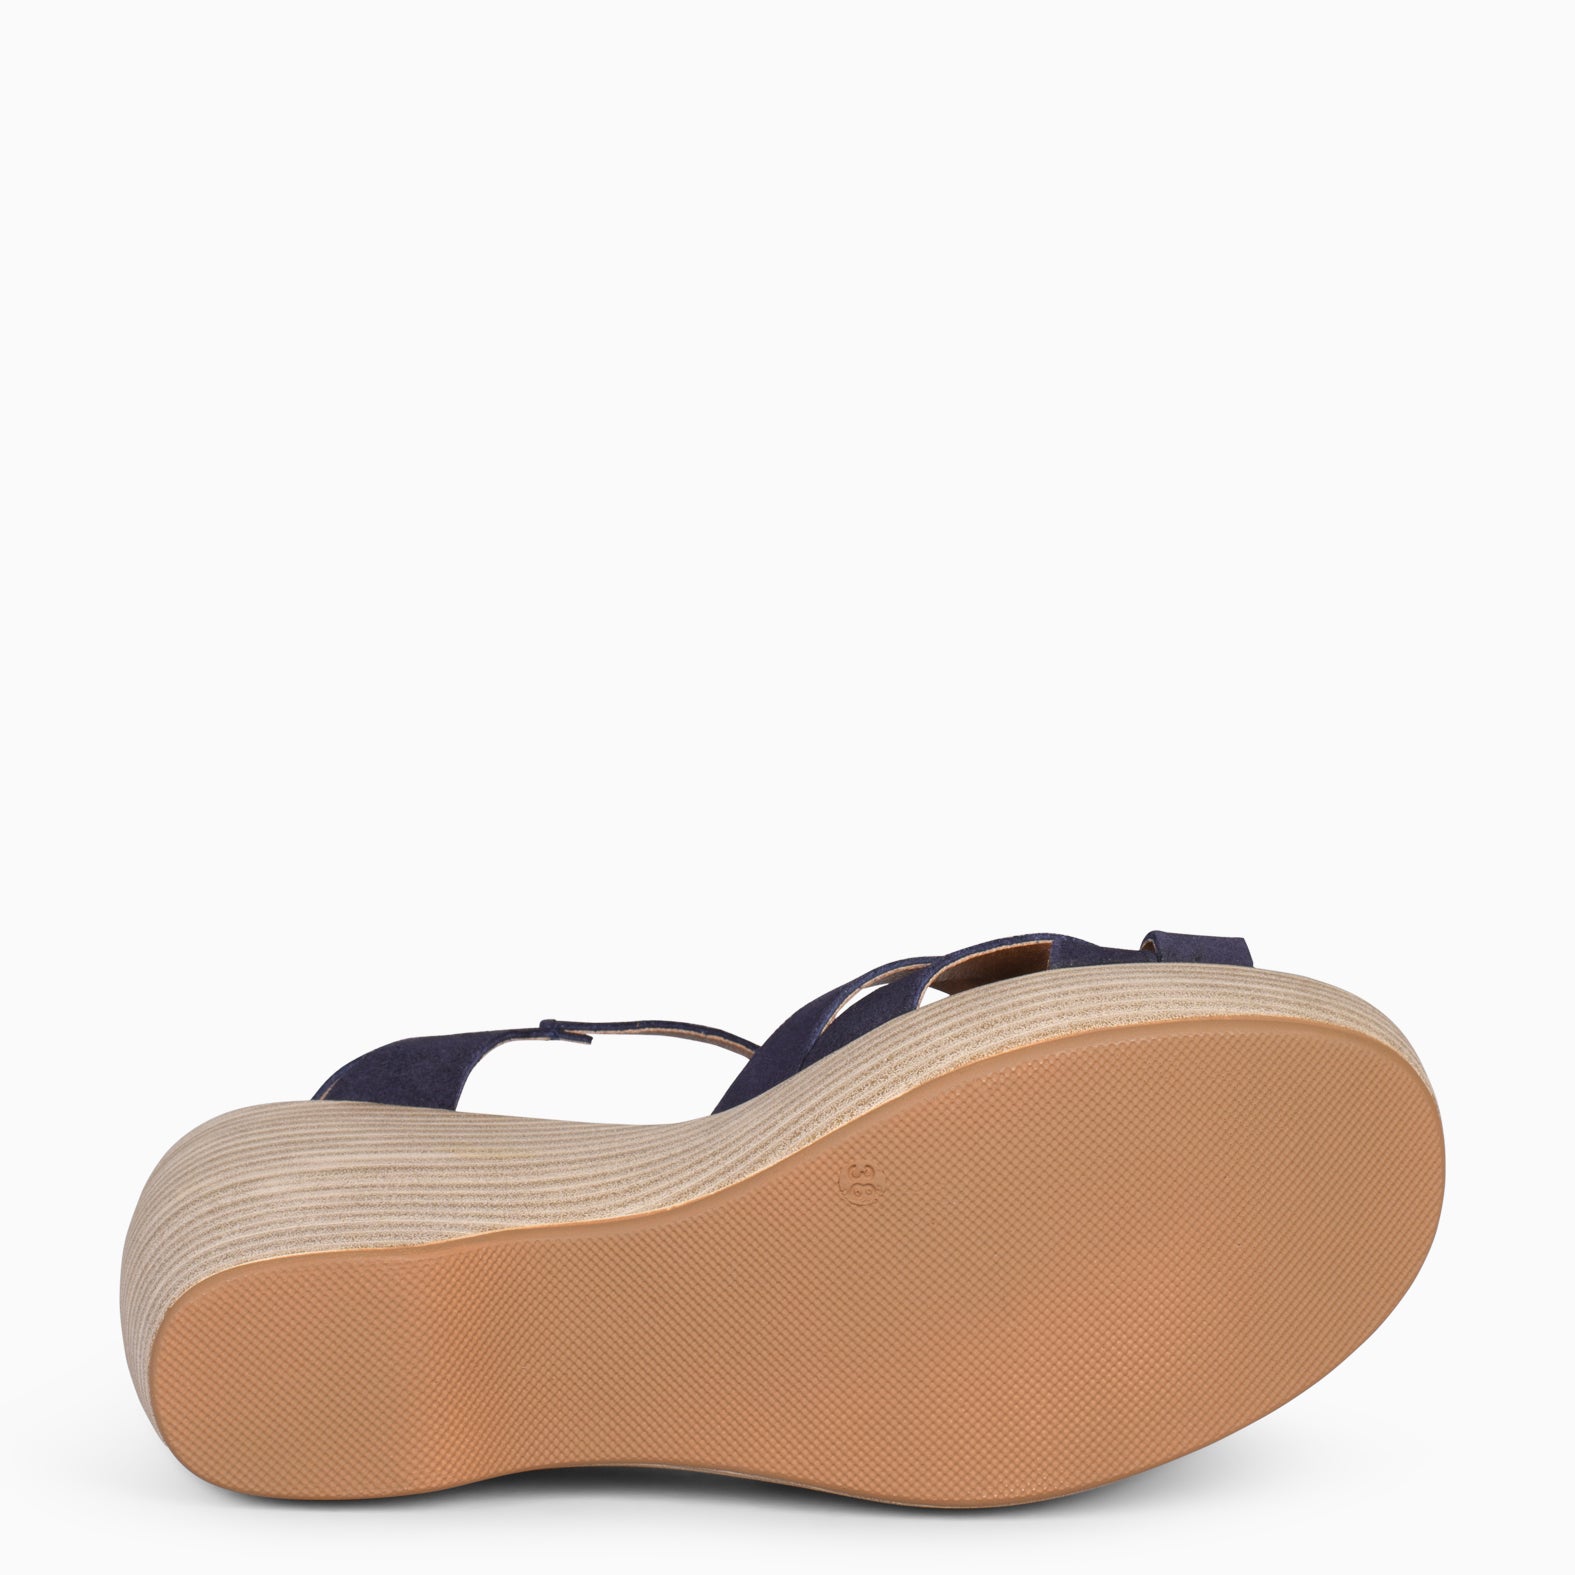 MALIBU – Sandales compensées imitation bois BLEU MARINE